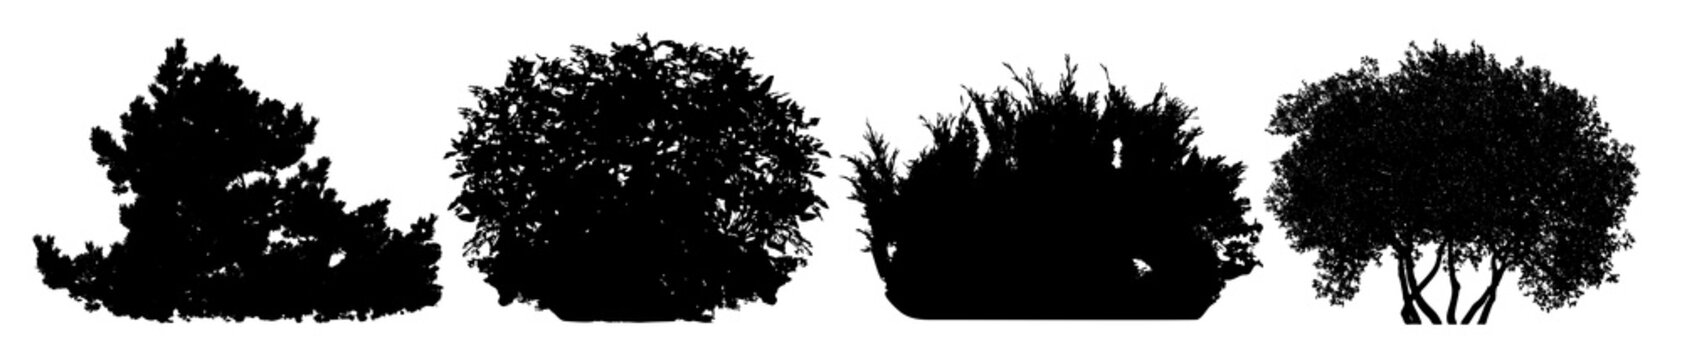 Bush silhouette vector set